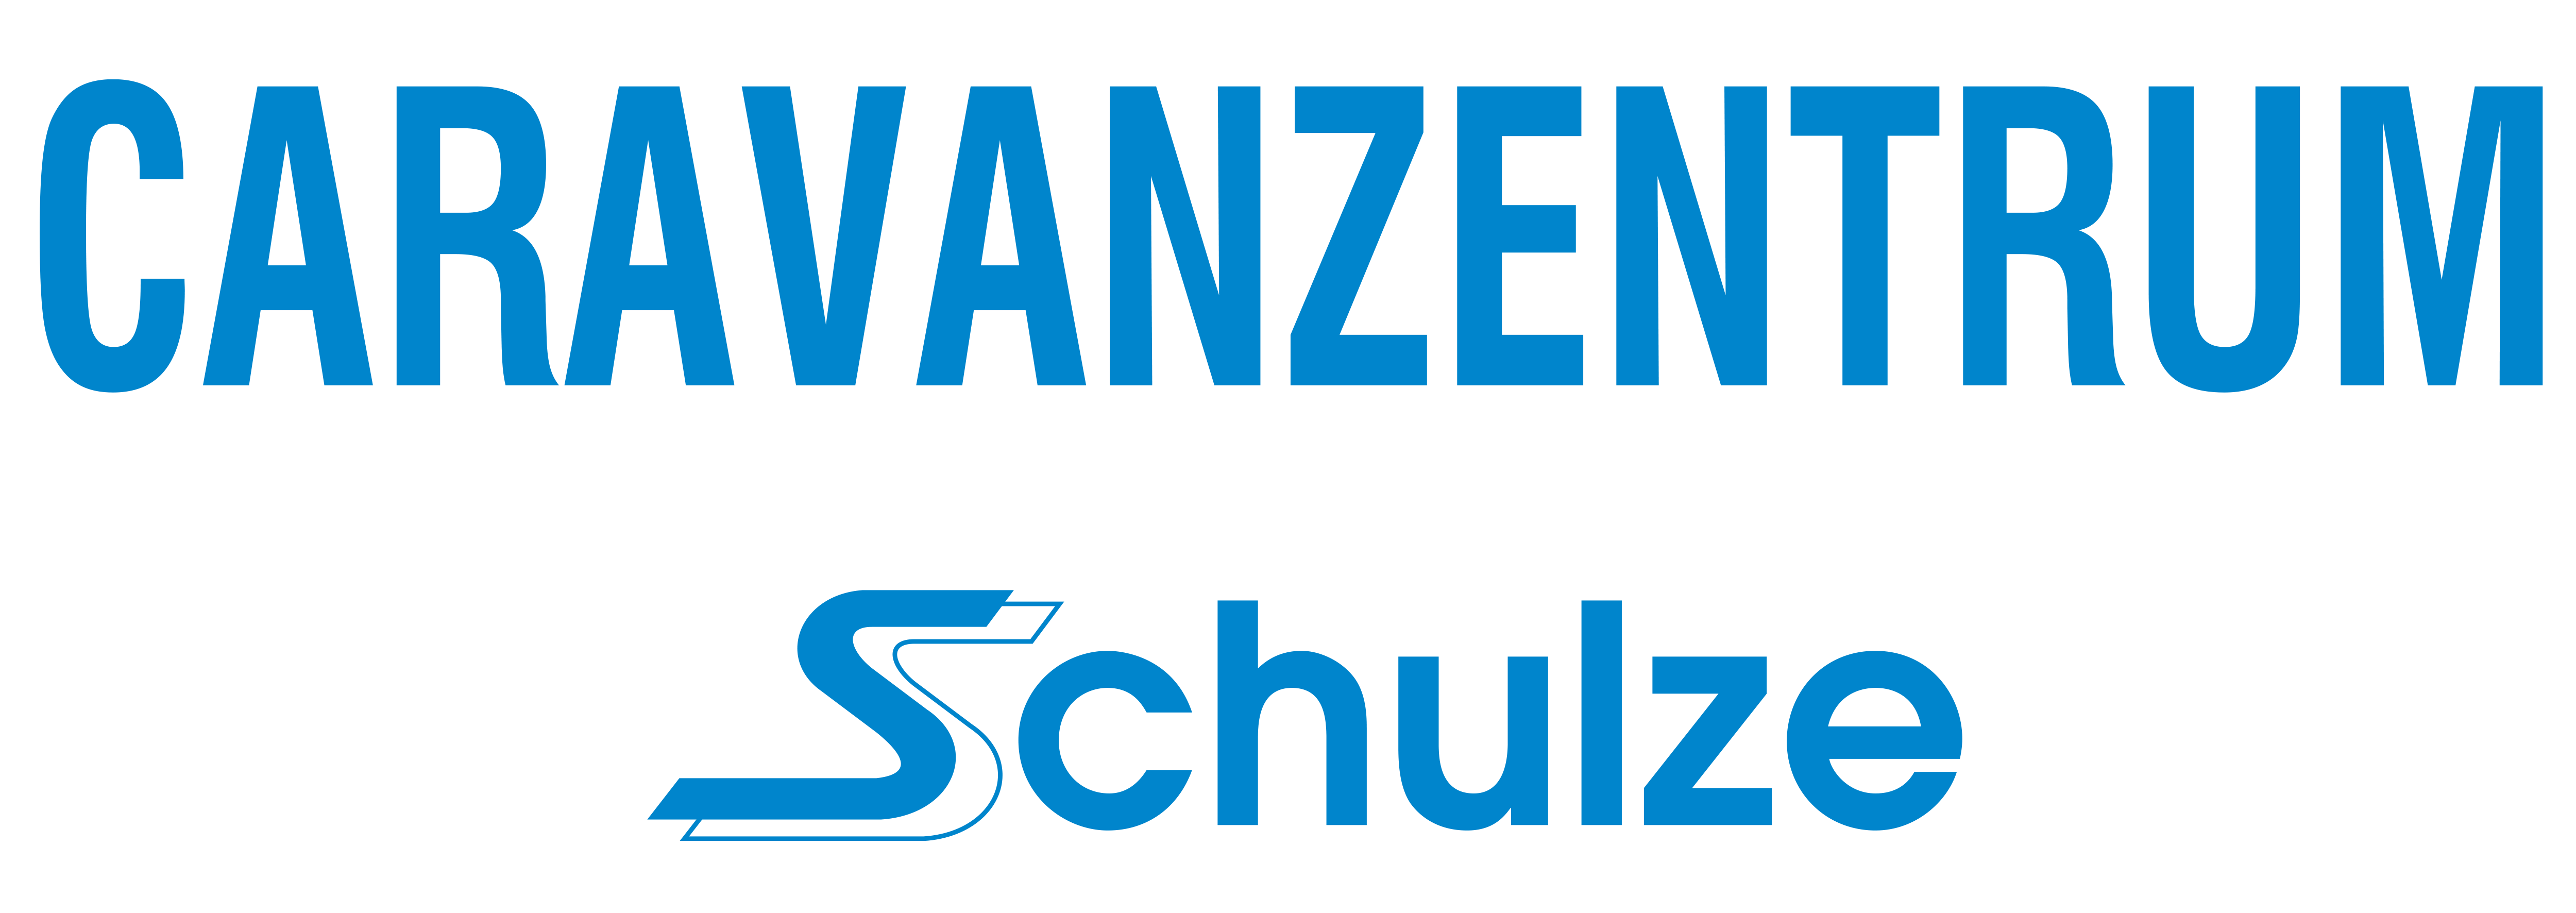 Caravanzentrum-Schulze